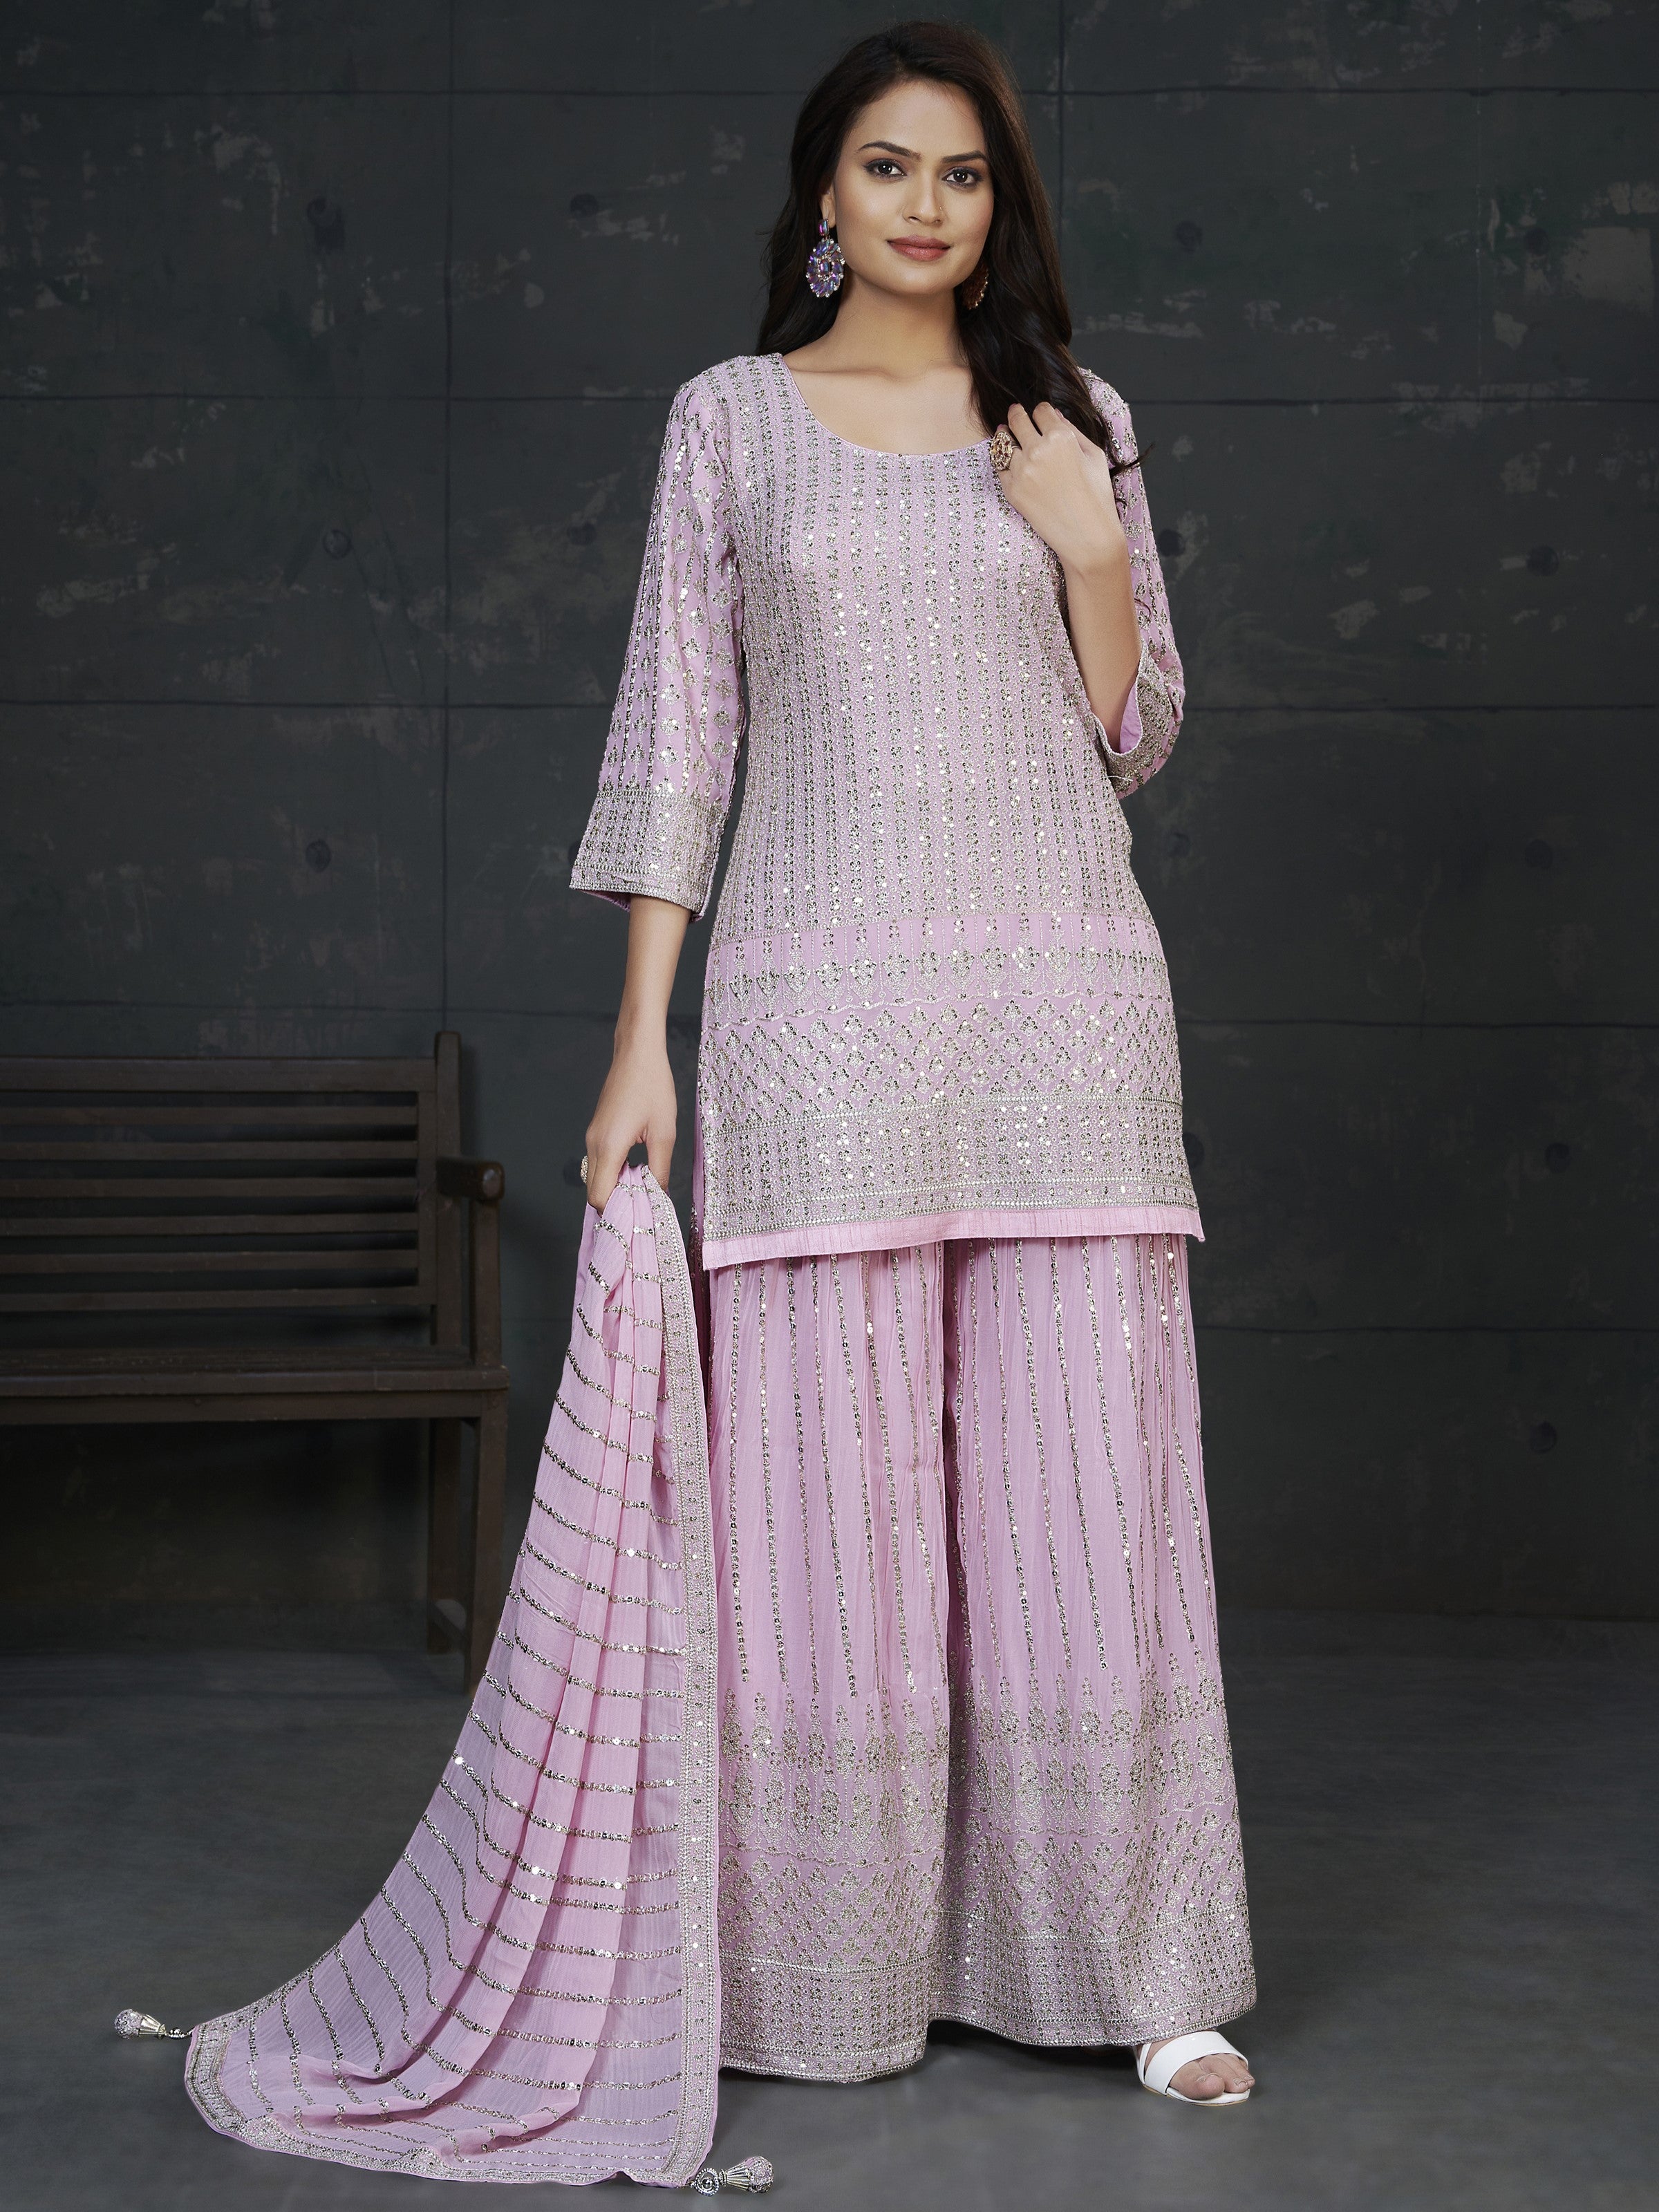 Women Dandiya Dress Navratri Chaniya Choli-Rajasthani Lehenga-Kutch  Embroidered Garba Dandiya Garba Style/Gujarati Style Free Size (Green and  Pink) : Amazon.ca: Clothing, Shoes & Accessories